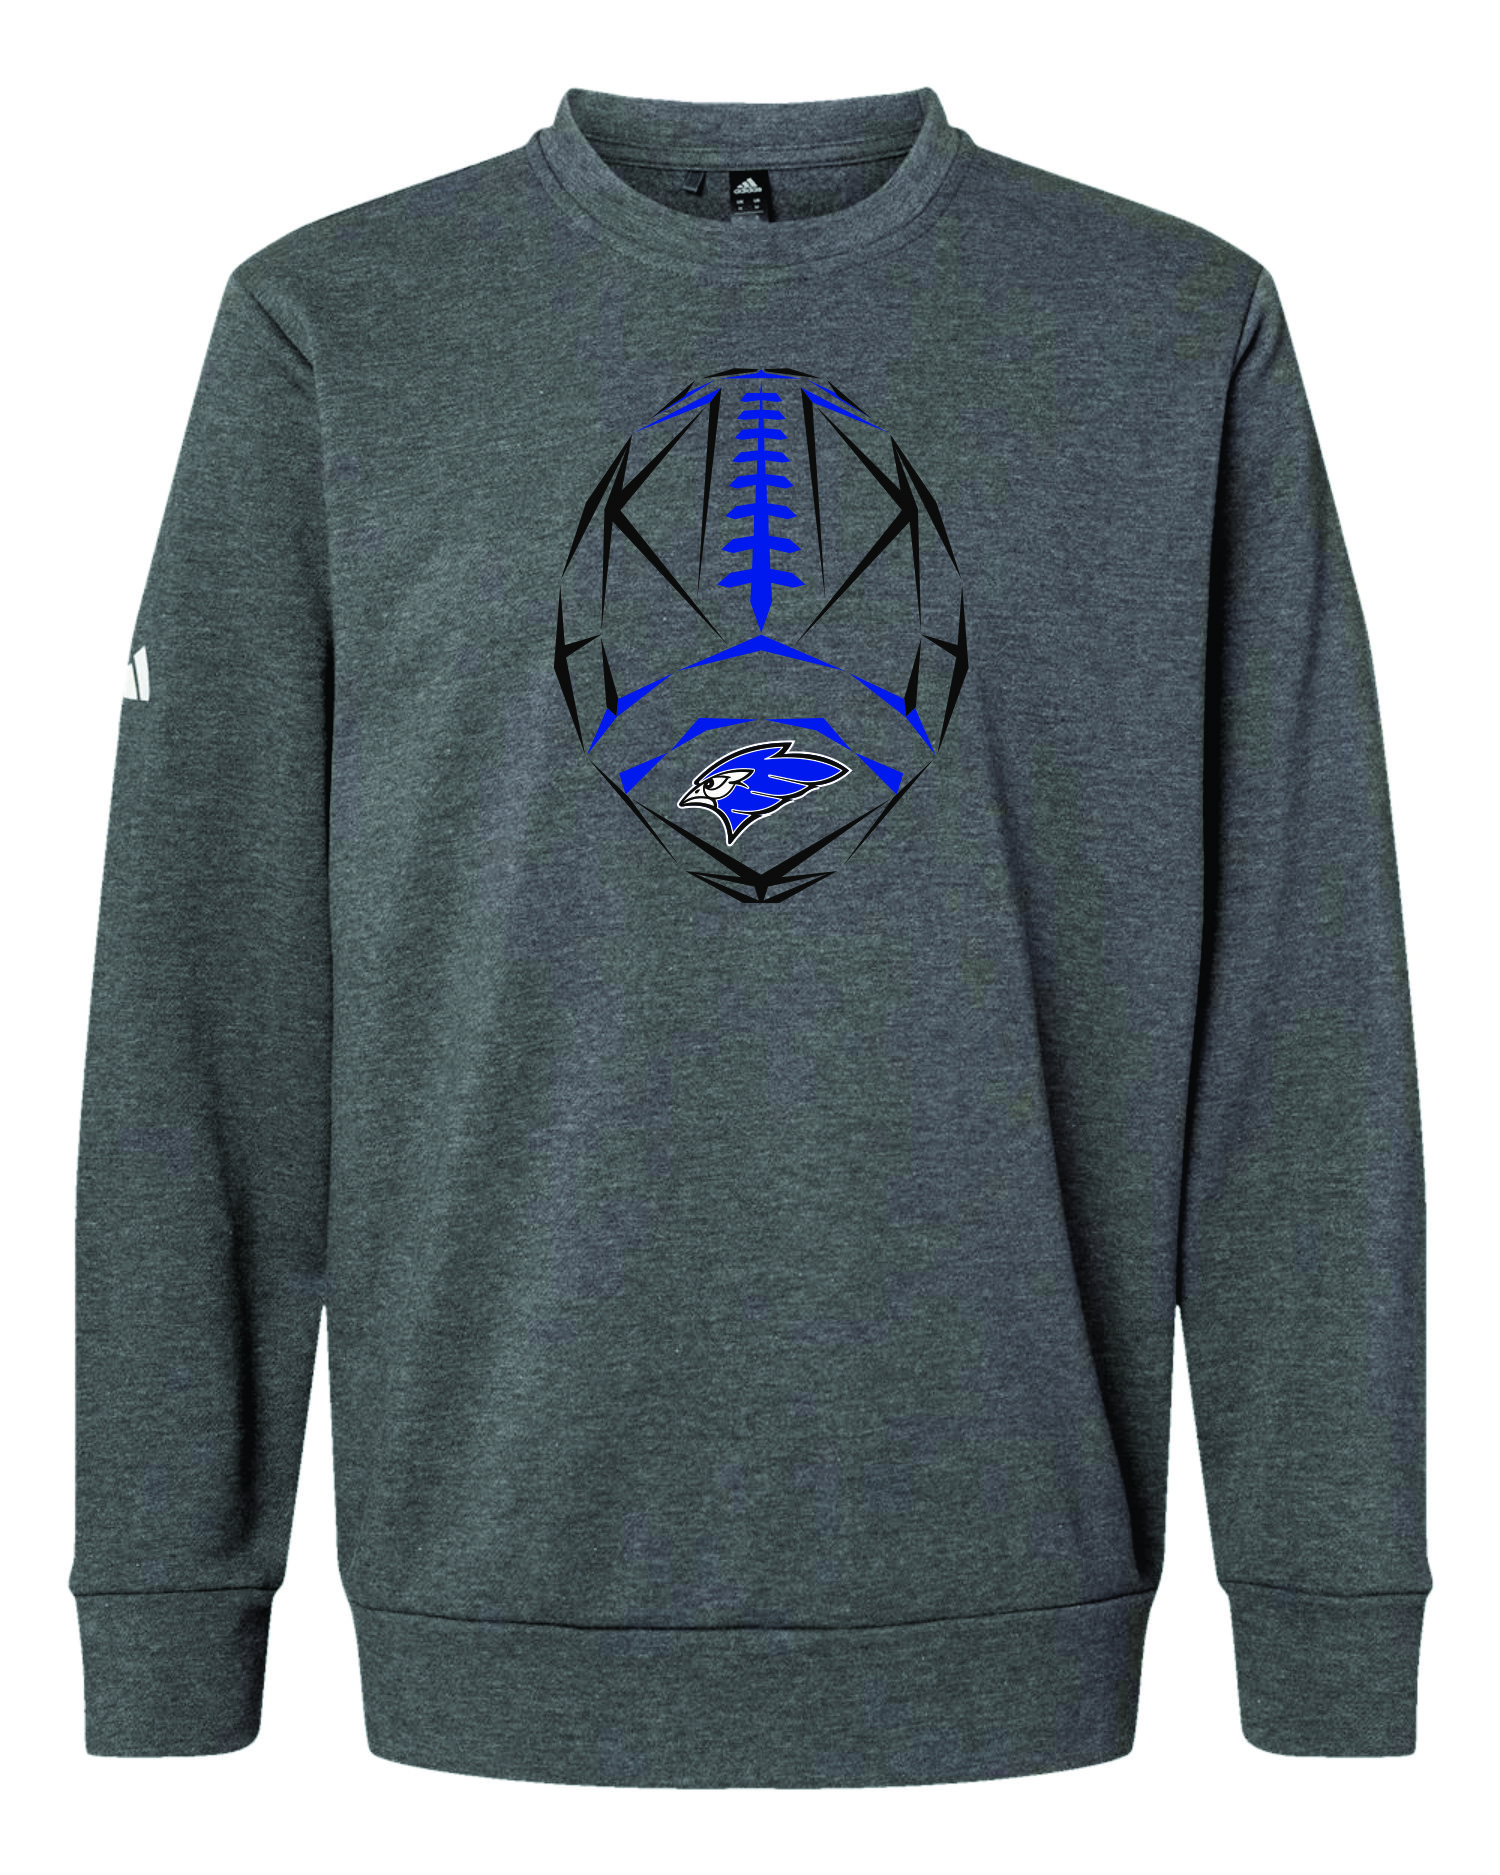 Blue Jay Football Fleece Unisex Orriginals Colby Sweatshirt Adidas (Dark Grey) Benefit Crewneck - A434